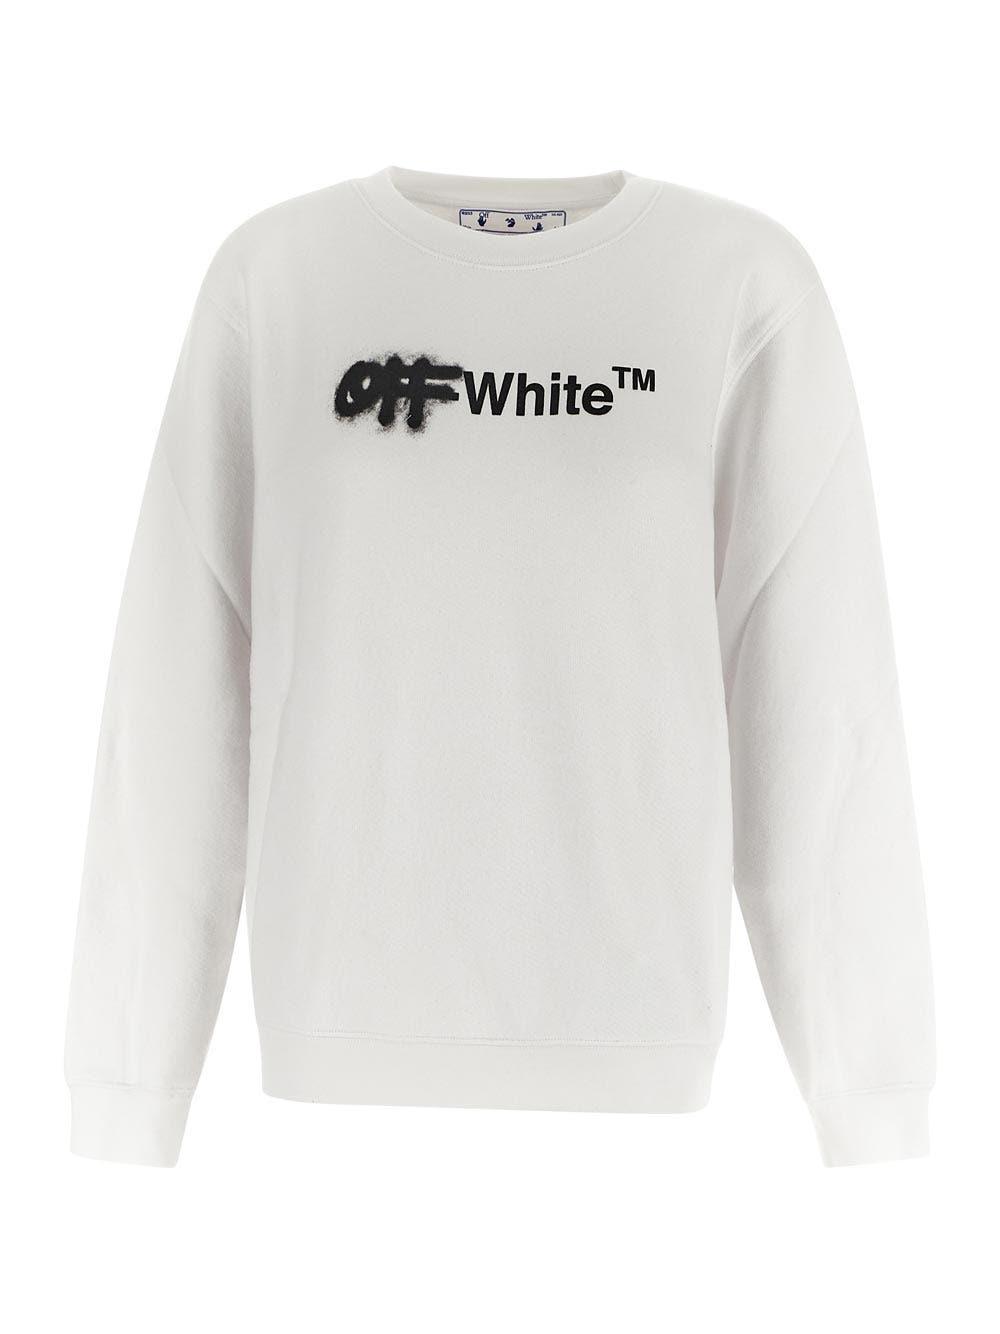 Off-White c/o Virgil Abloh Cotton Spray Helvetica Crewneck in White | Lyst